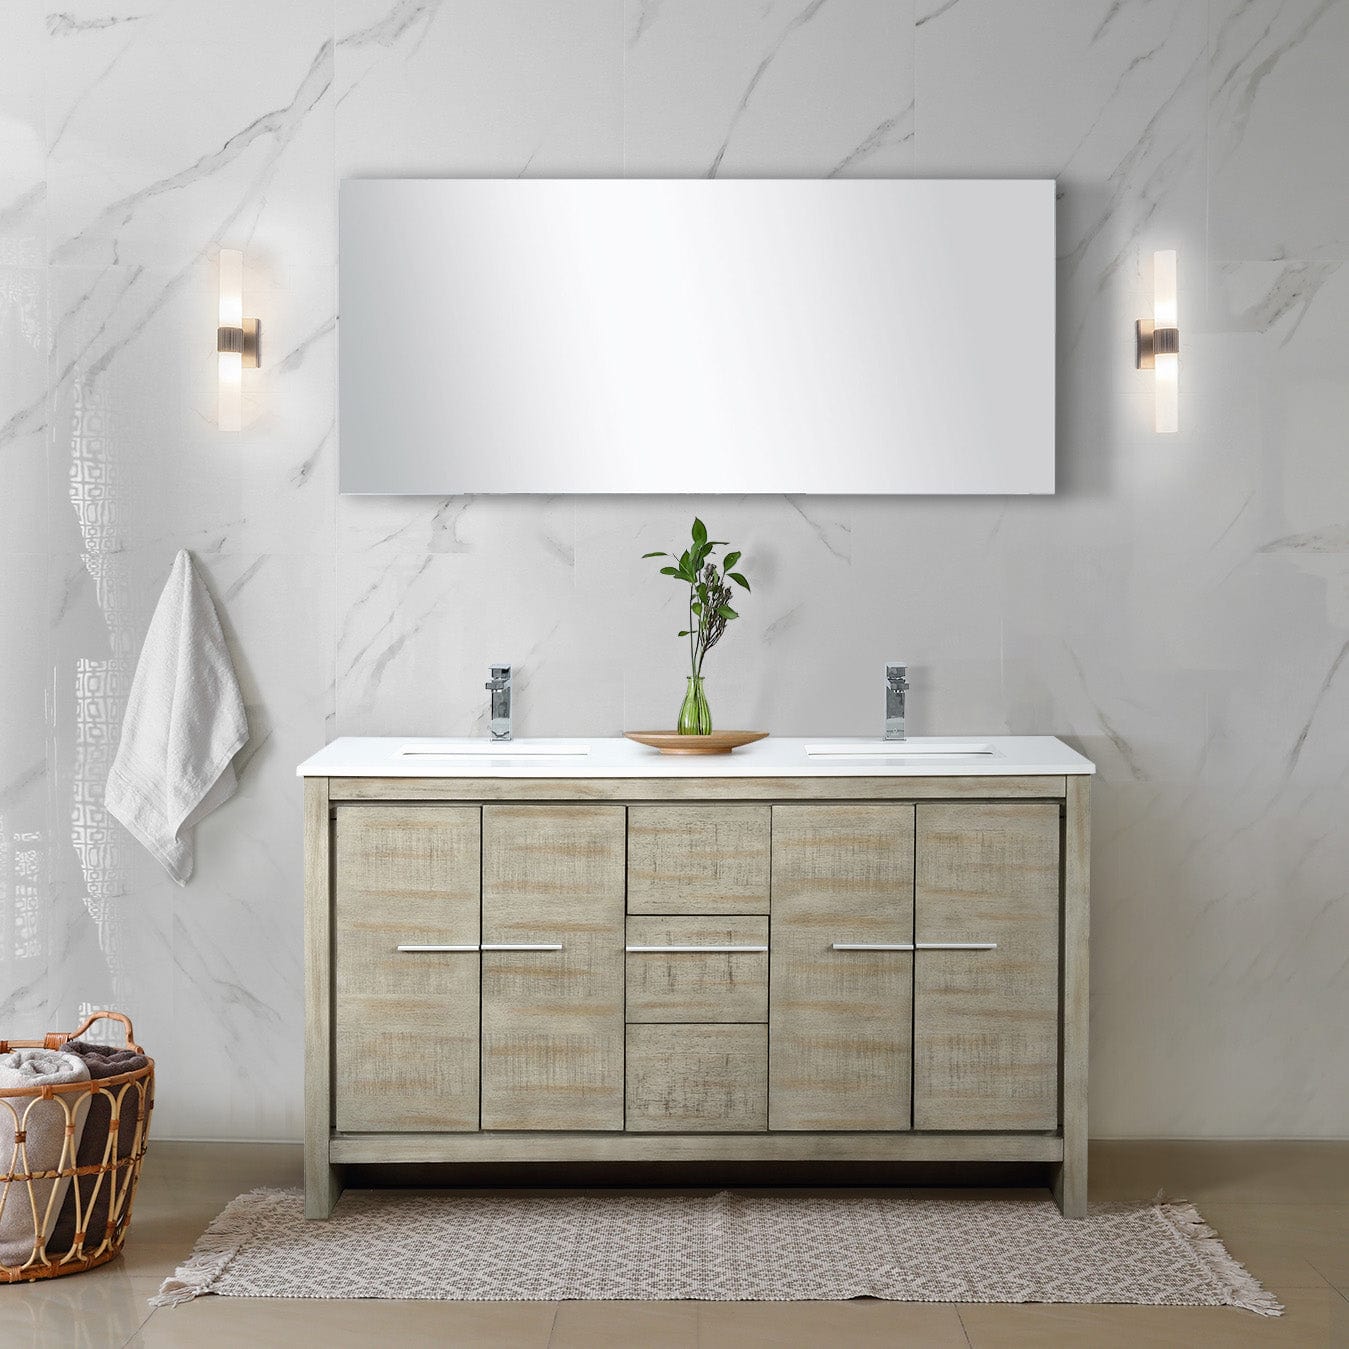 Lexora Bathroom Vanity Cultured Marble / Chrome Faucet / No Mirror Lafarre 60" Rustic Acacia Double Bathroom Vanity